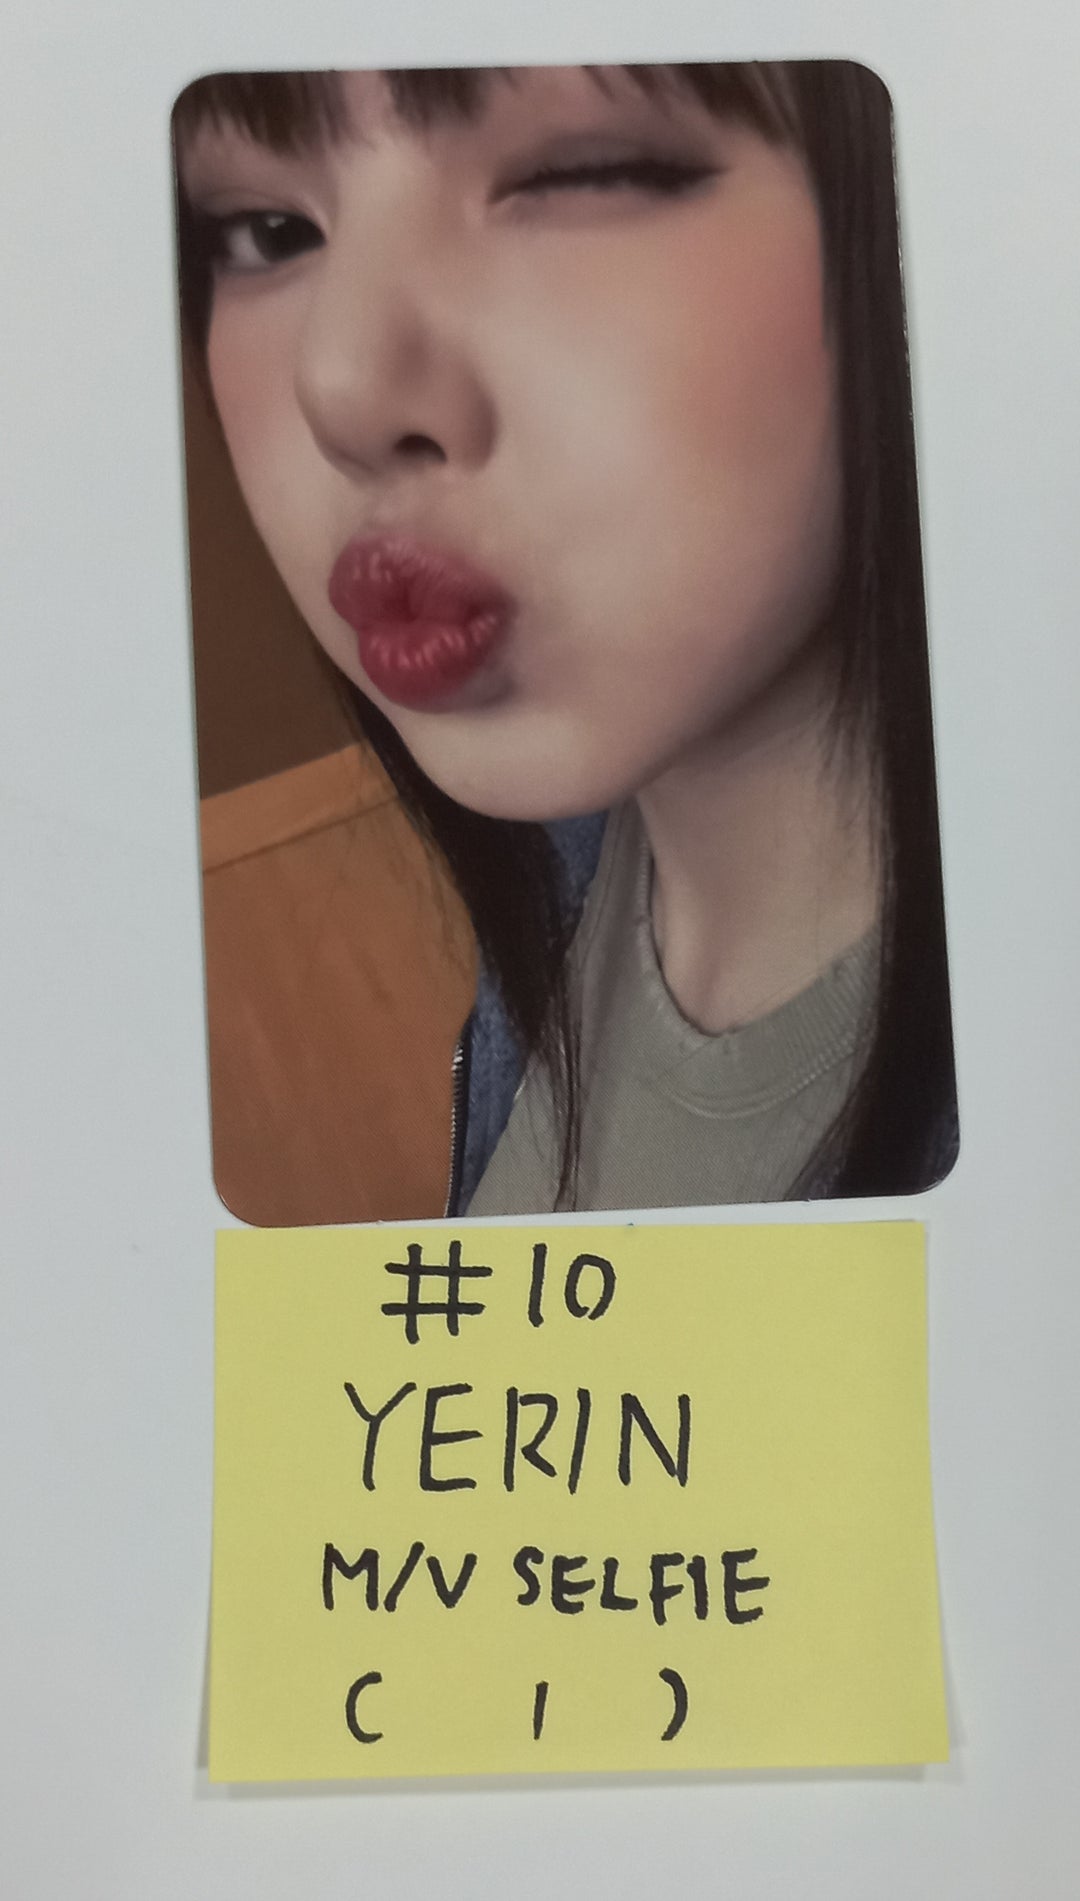 YERIN 'Ready, Set, LOVE' - Official Photocard [Nemo Ver] [23.08.31]